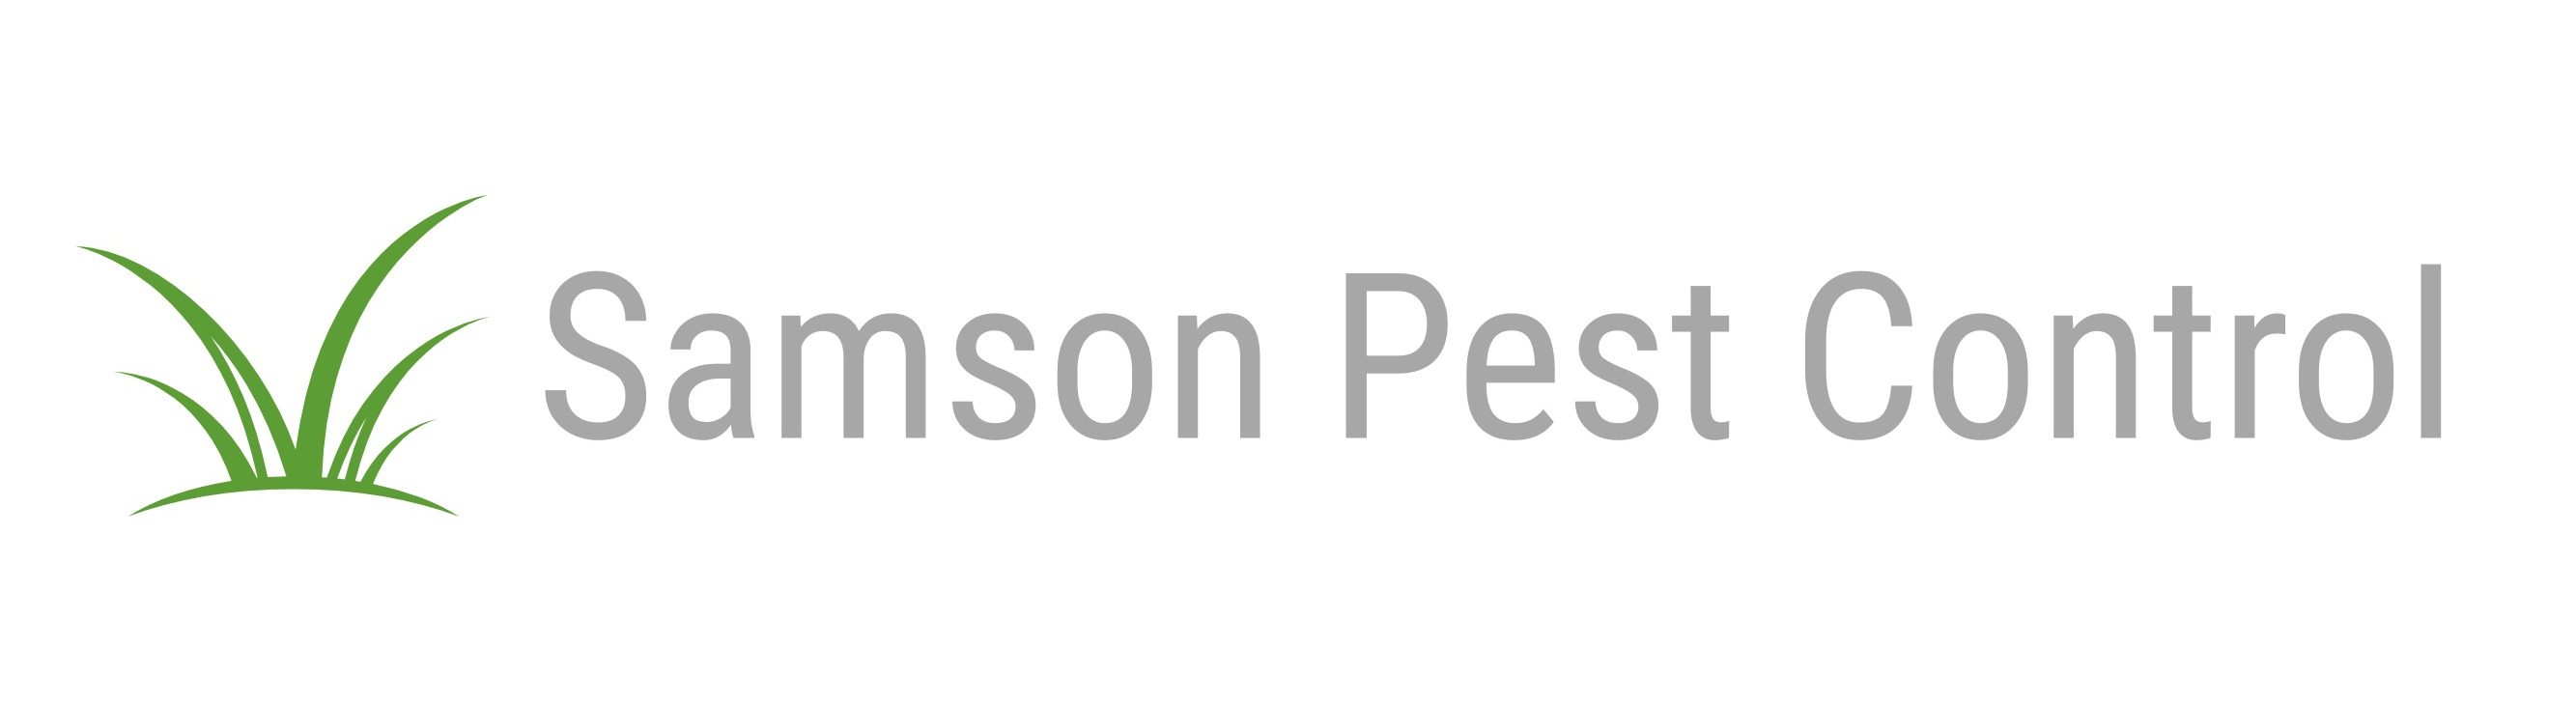 Samson Pest Control